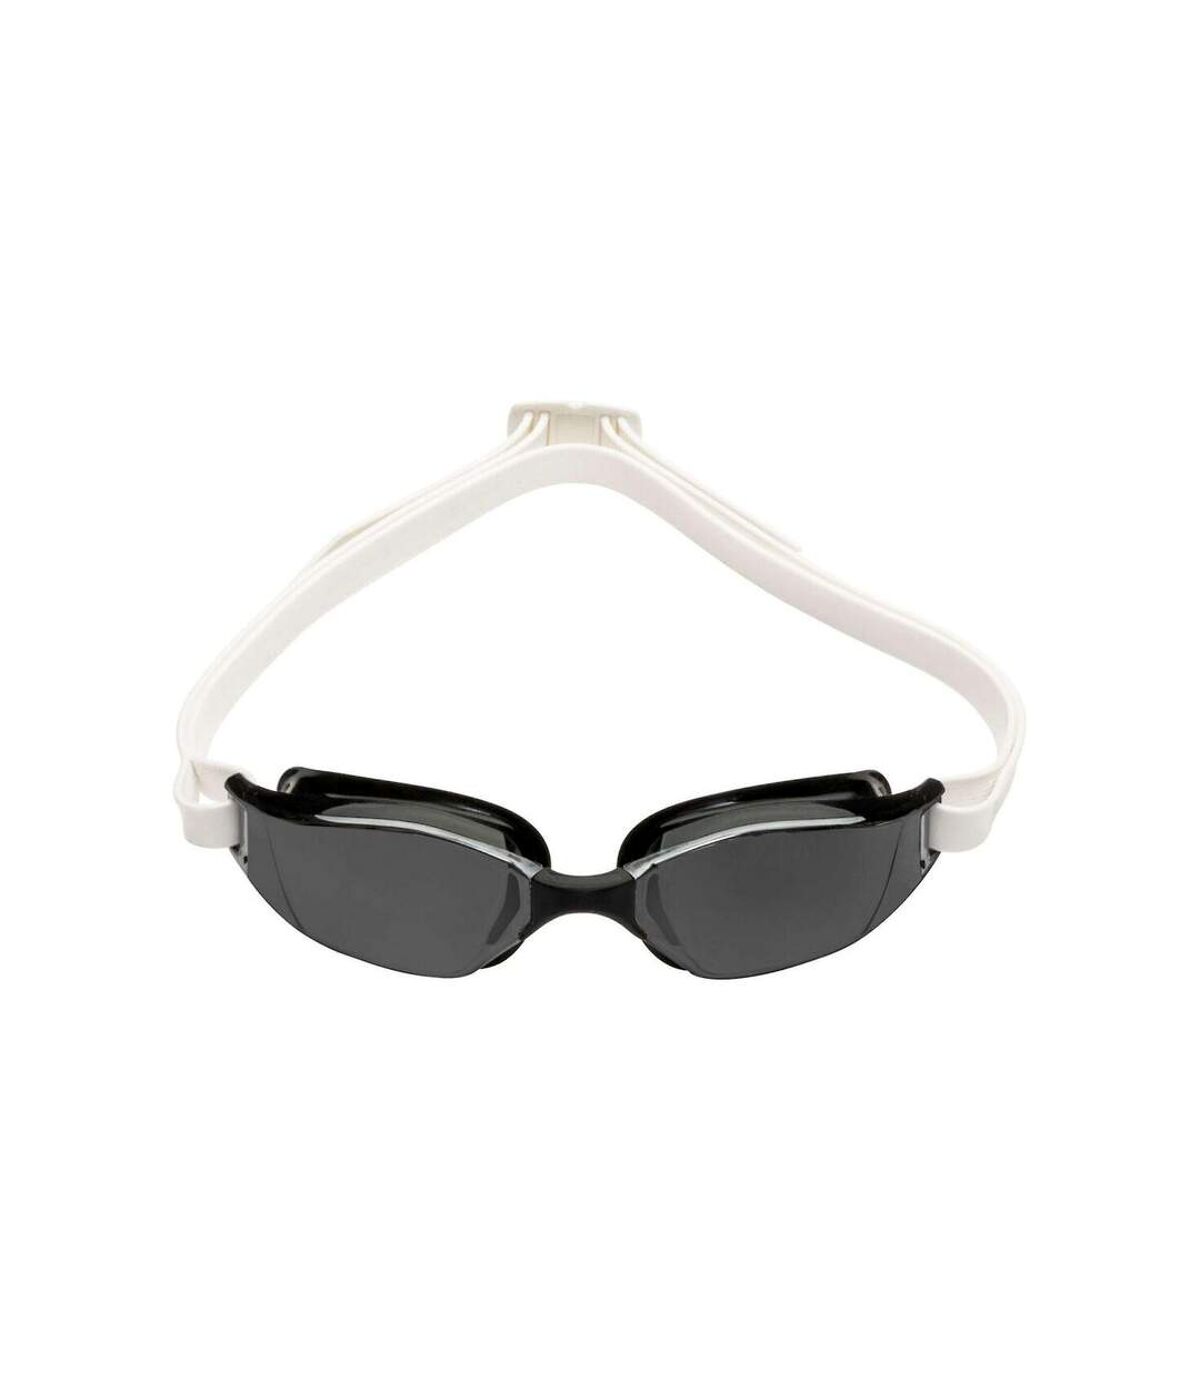 Aquasphere Unisex Adult Xceed Swimming Goggles (Black/White)